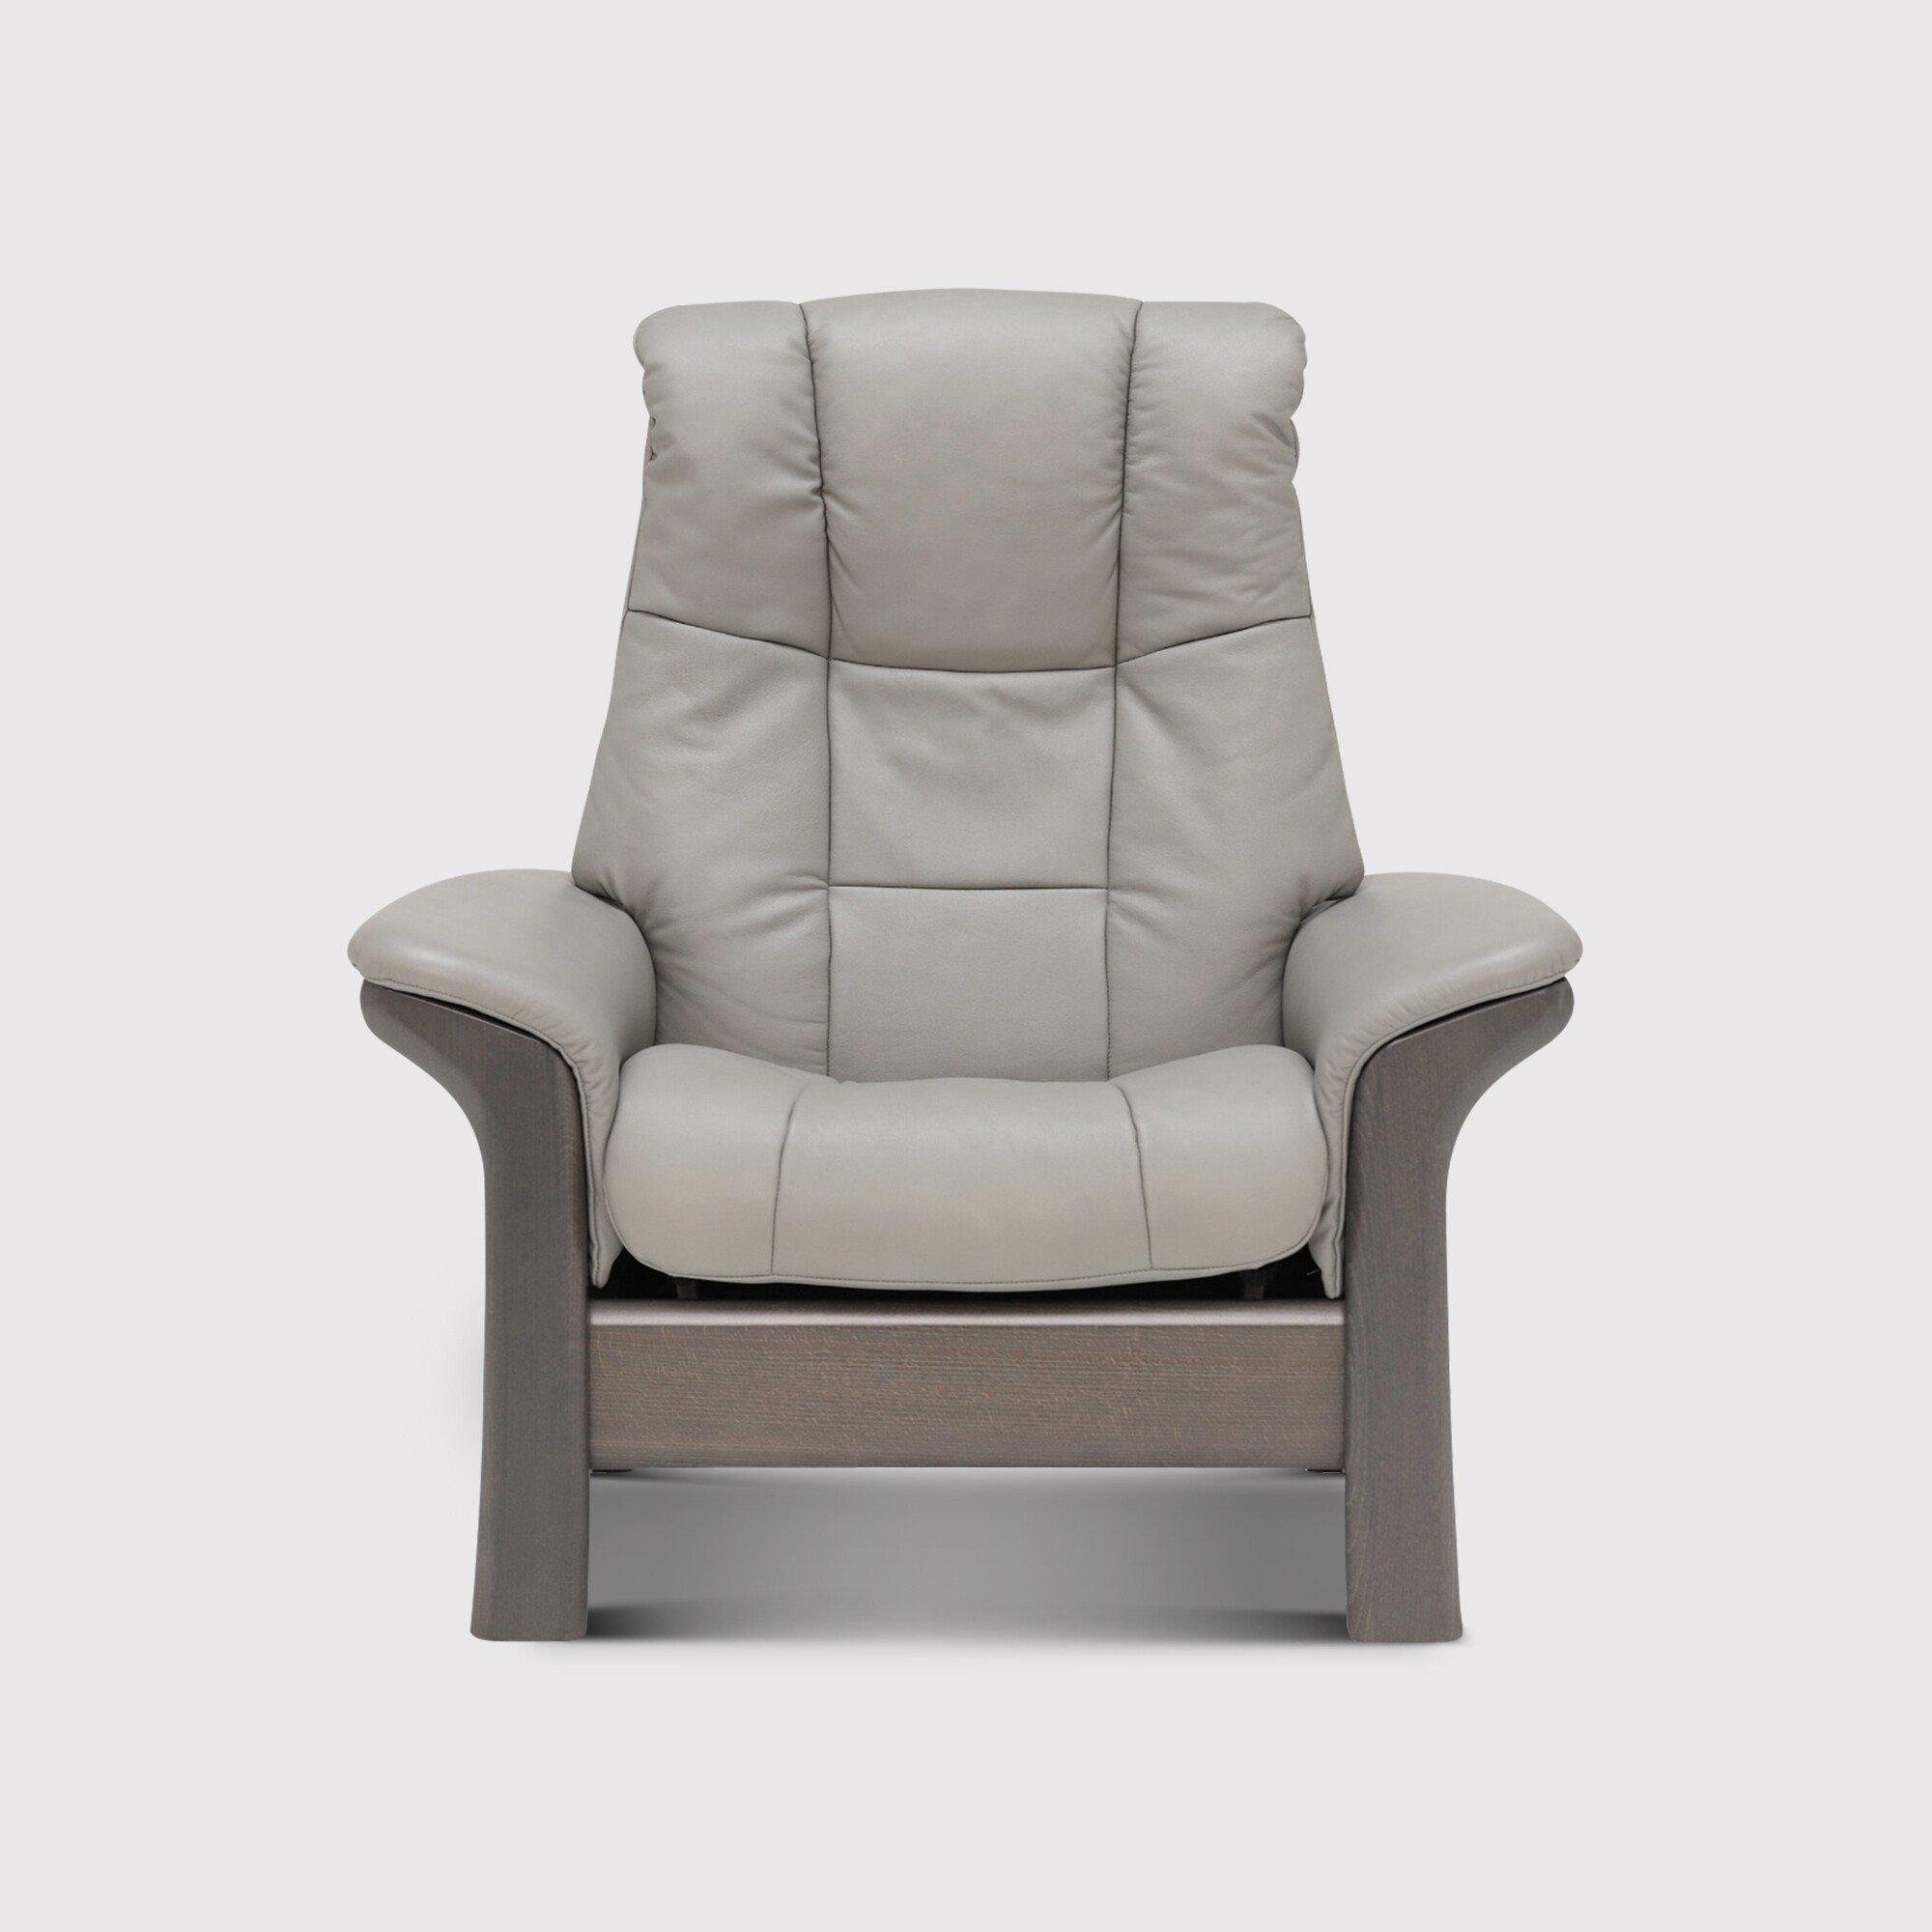 Stressless Windsor High Back 1 Seater Sofa Quickship, Grey Leather | Barker & Stonehouse